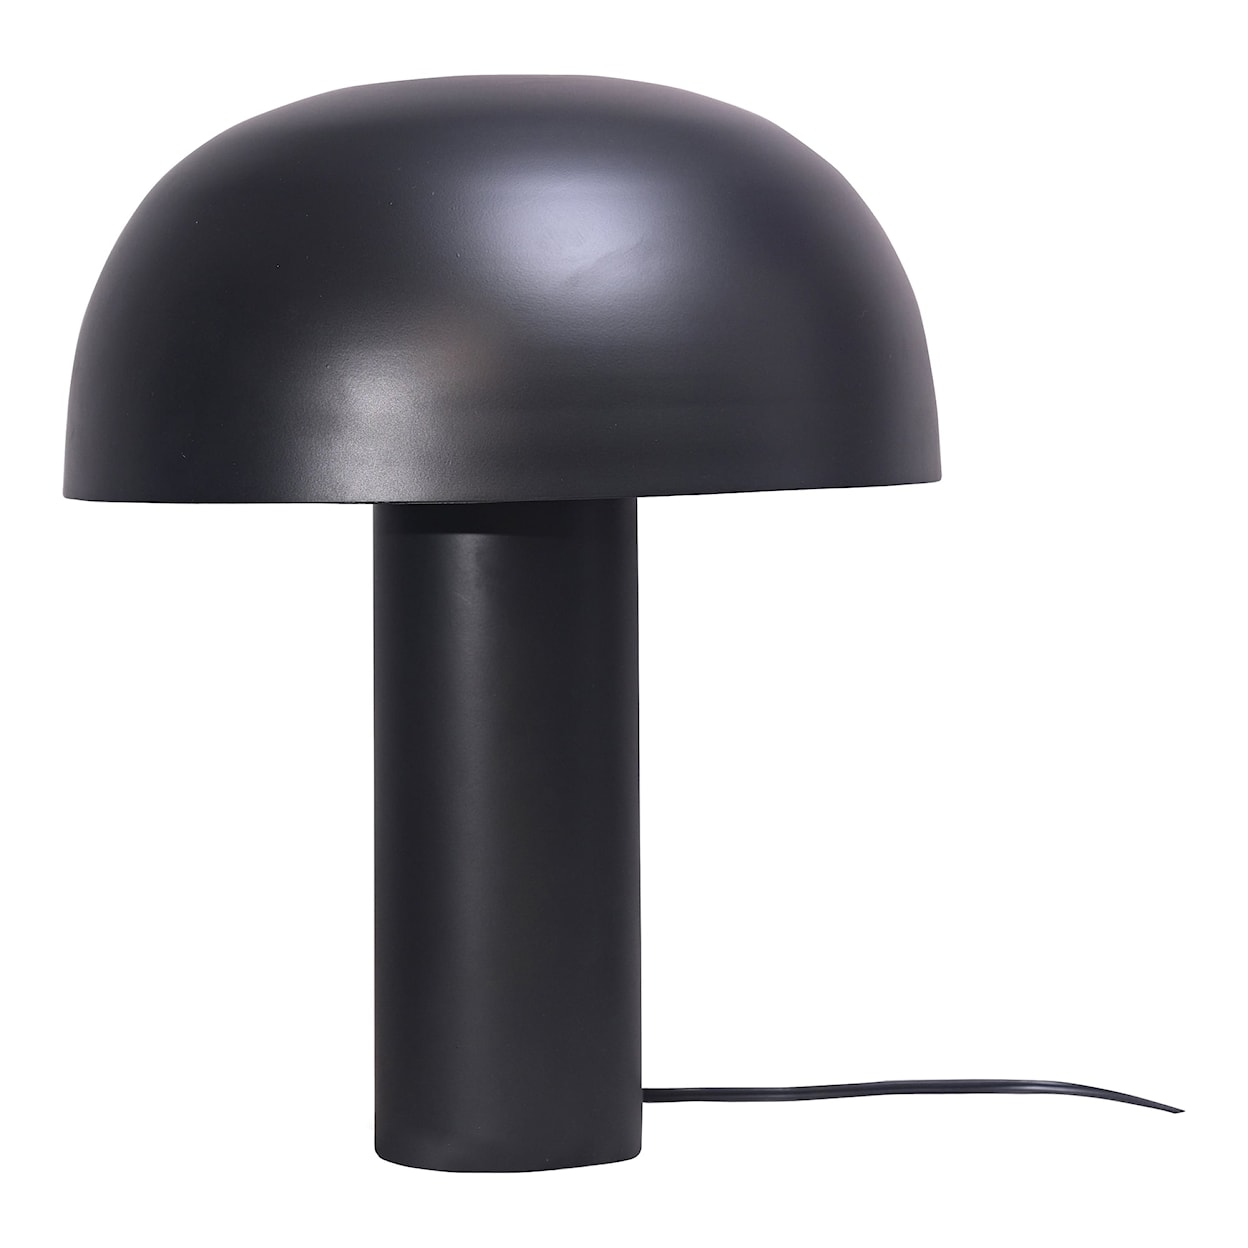 Moe's Home Collection Nanu Black Table Lamp